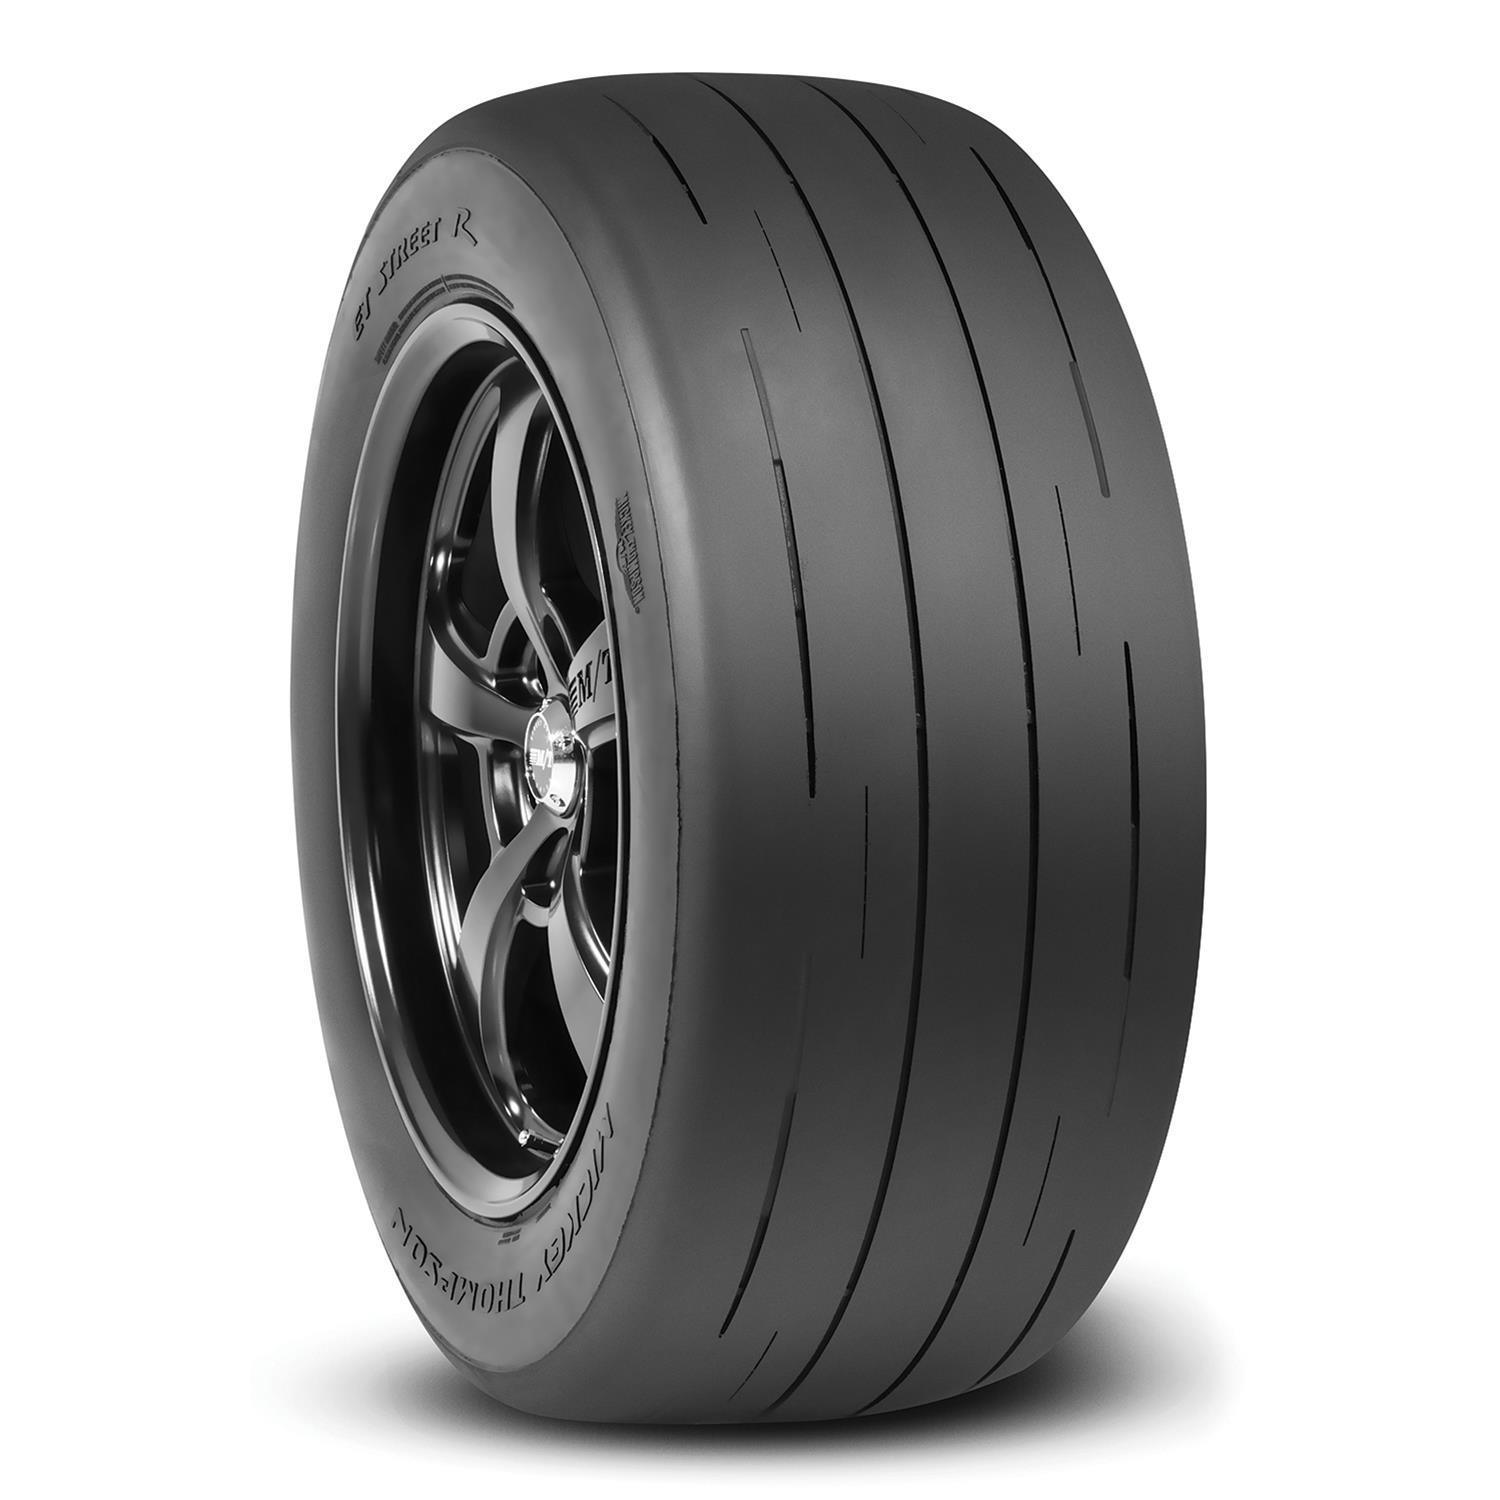 315/60R15 ET Street R Tire - Burlile Performance Products